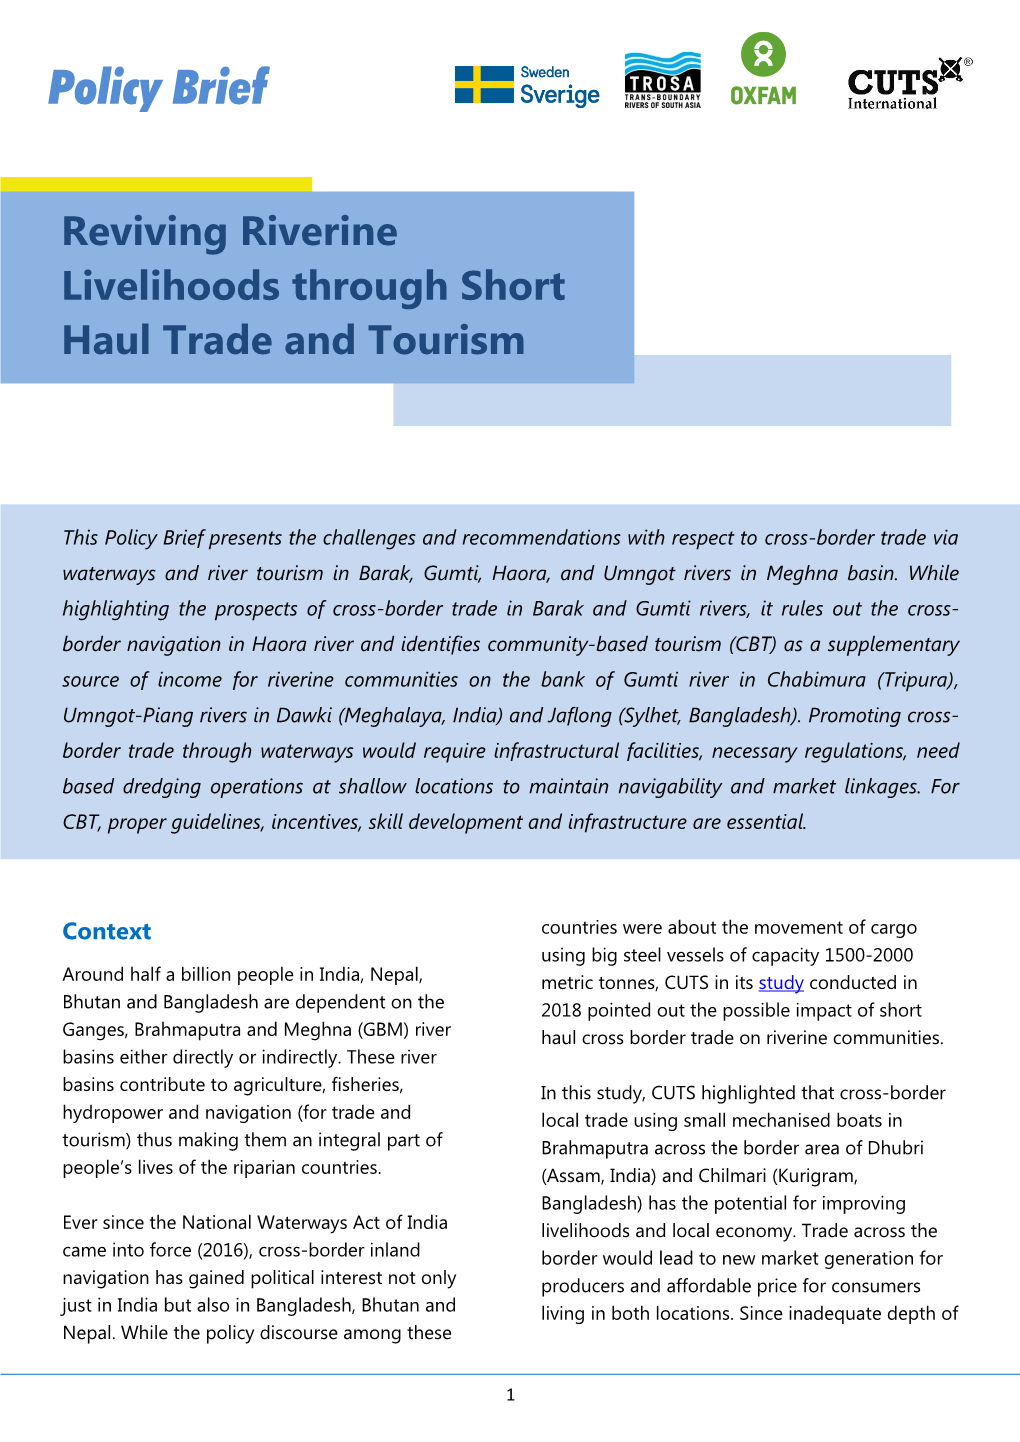 Reviving Riverine Livelihoods Through Short Haul Trade